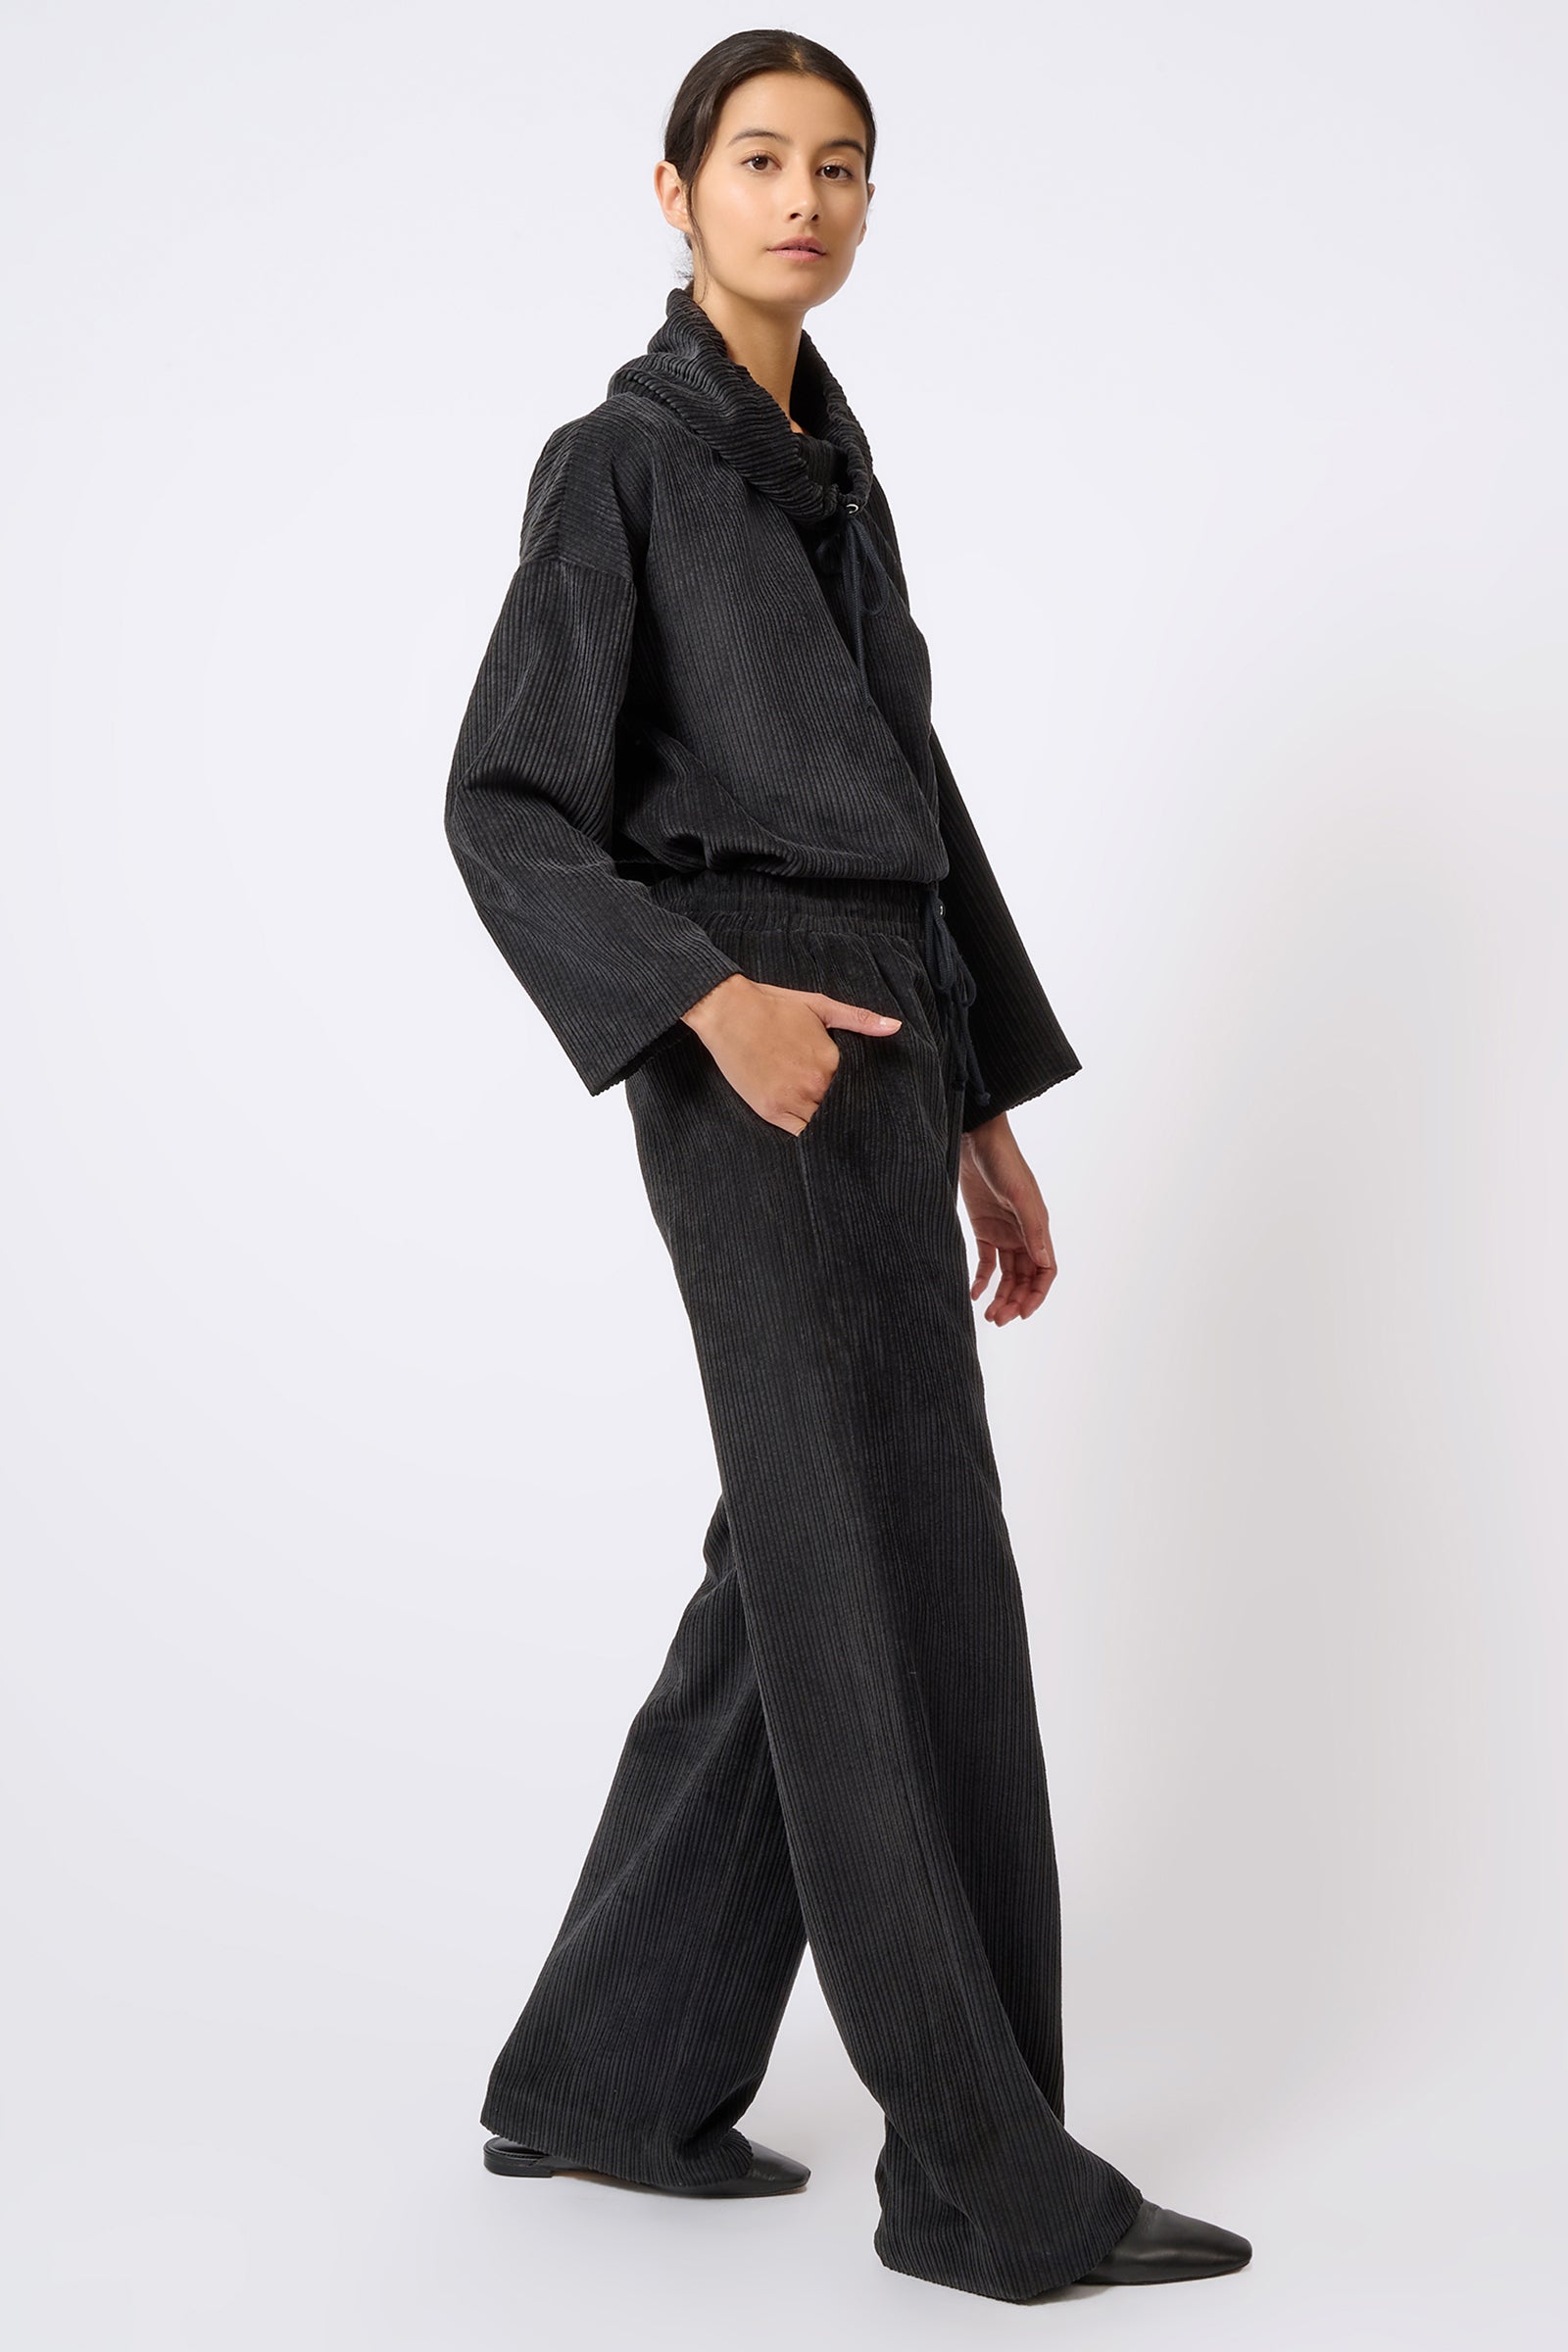 Kal Rieman Debbie Drawstring Pant in Black on Model Walking Full Side View